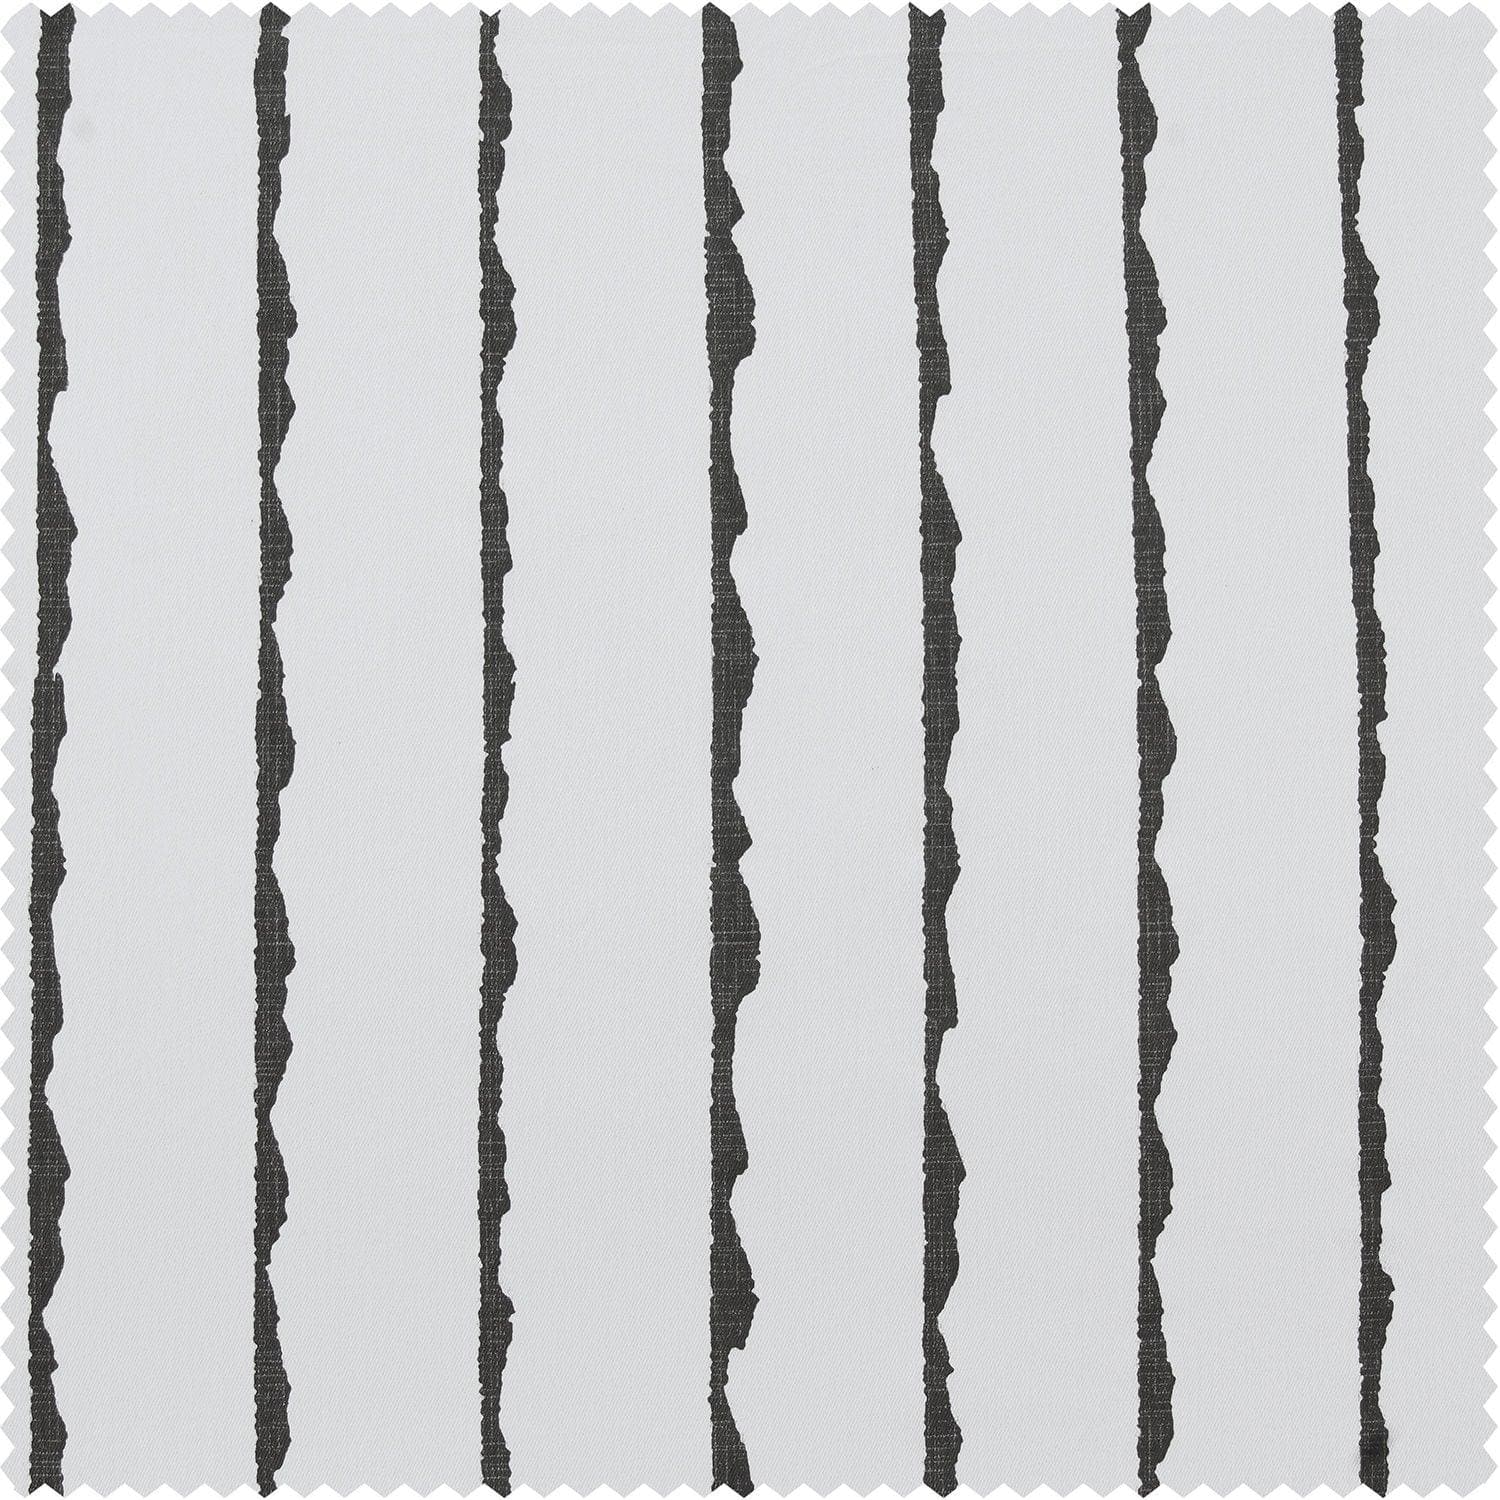 Sharkskin Black Striped Printed Cotton Custom Curtain